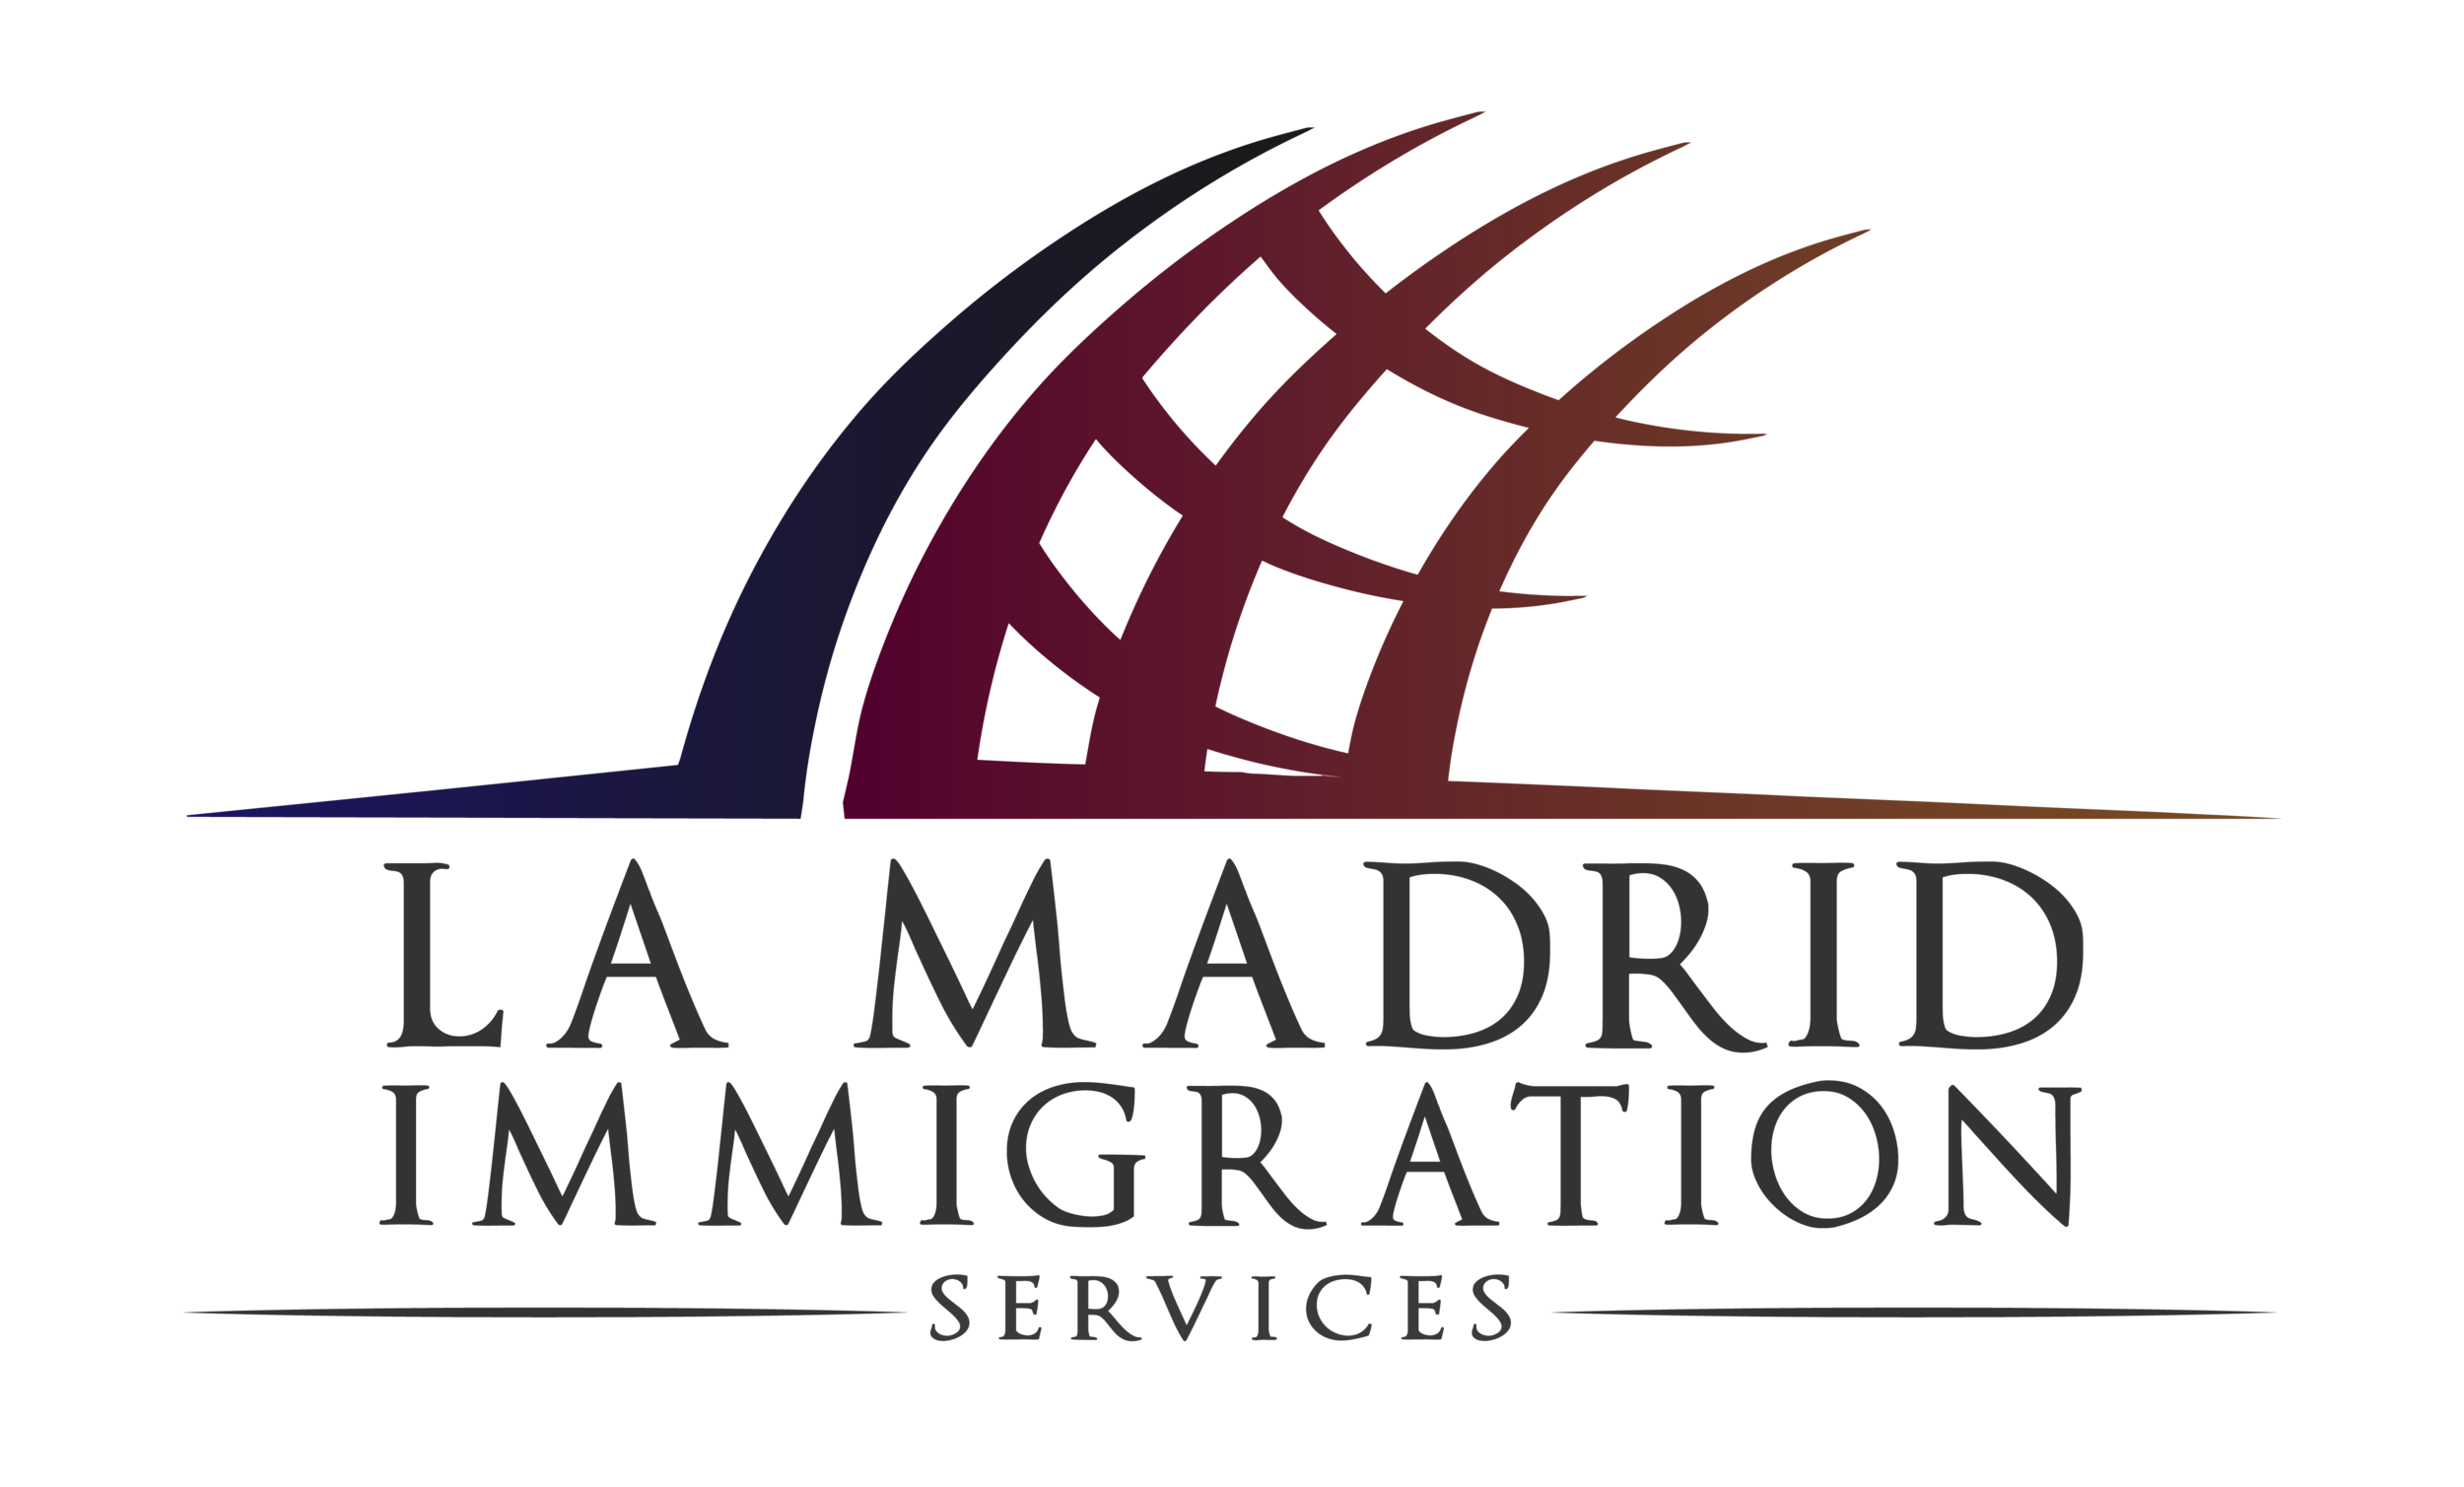 La Madrid Immigration Services